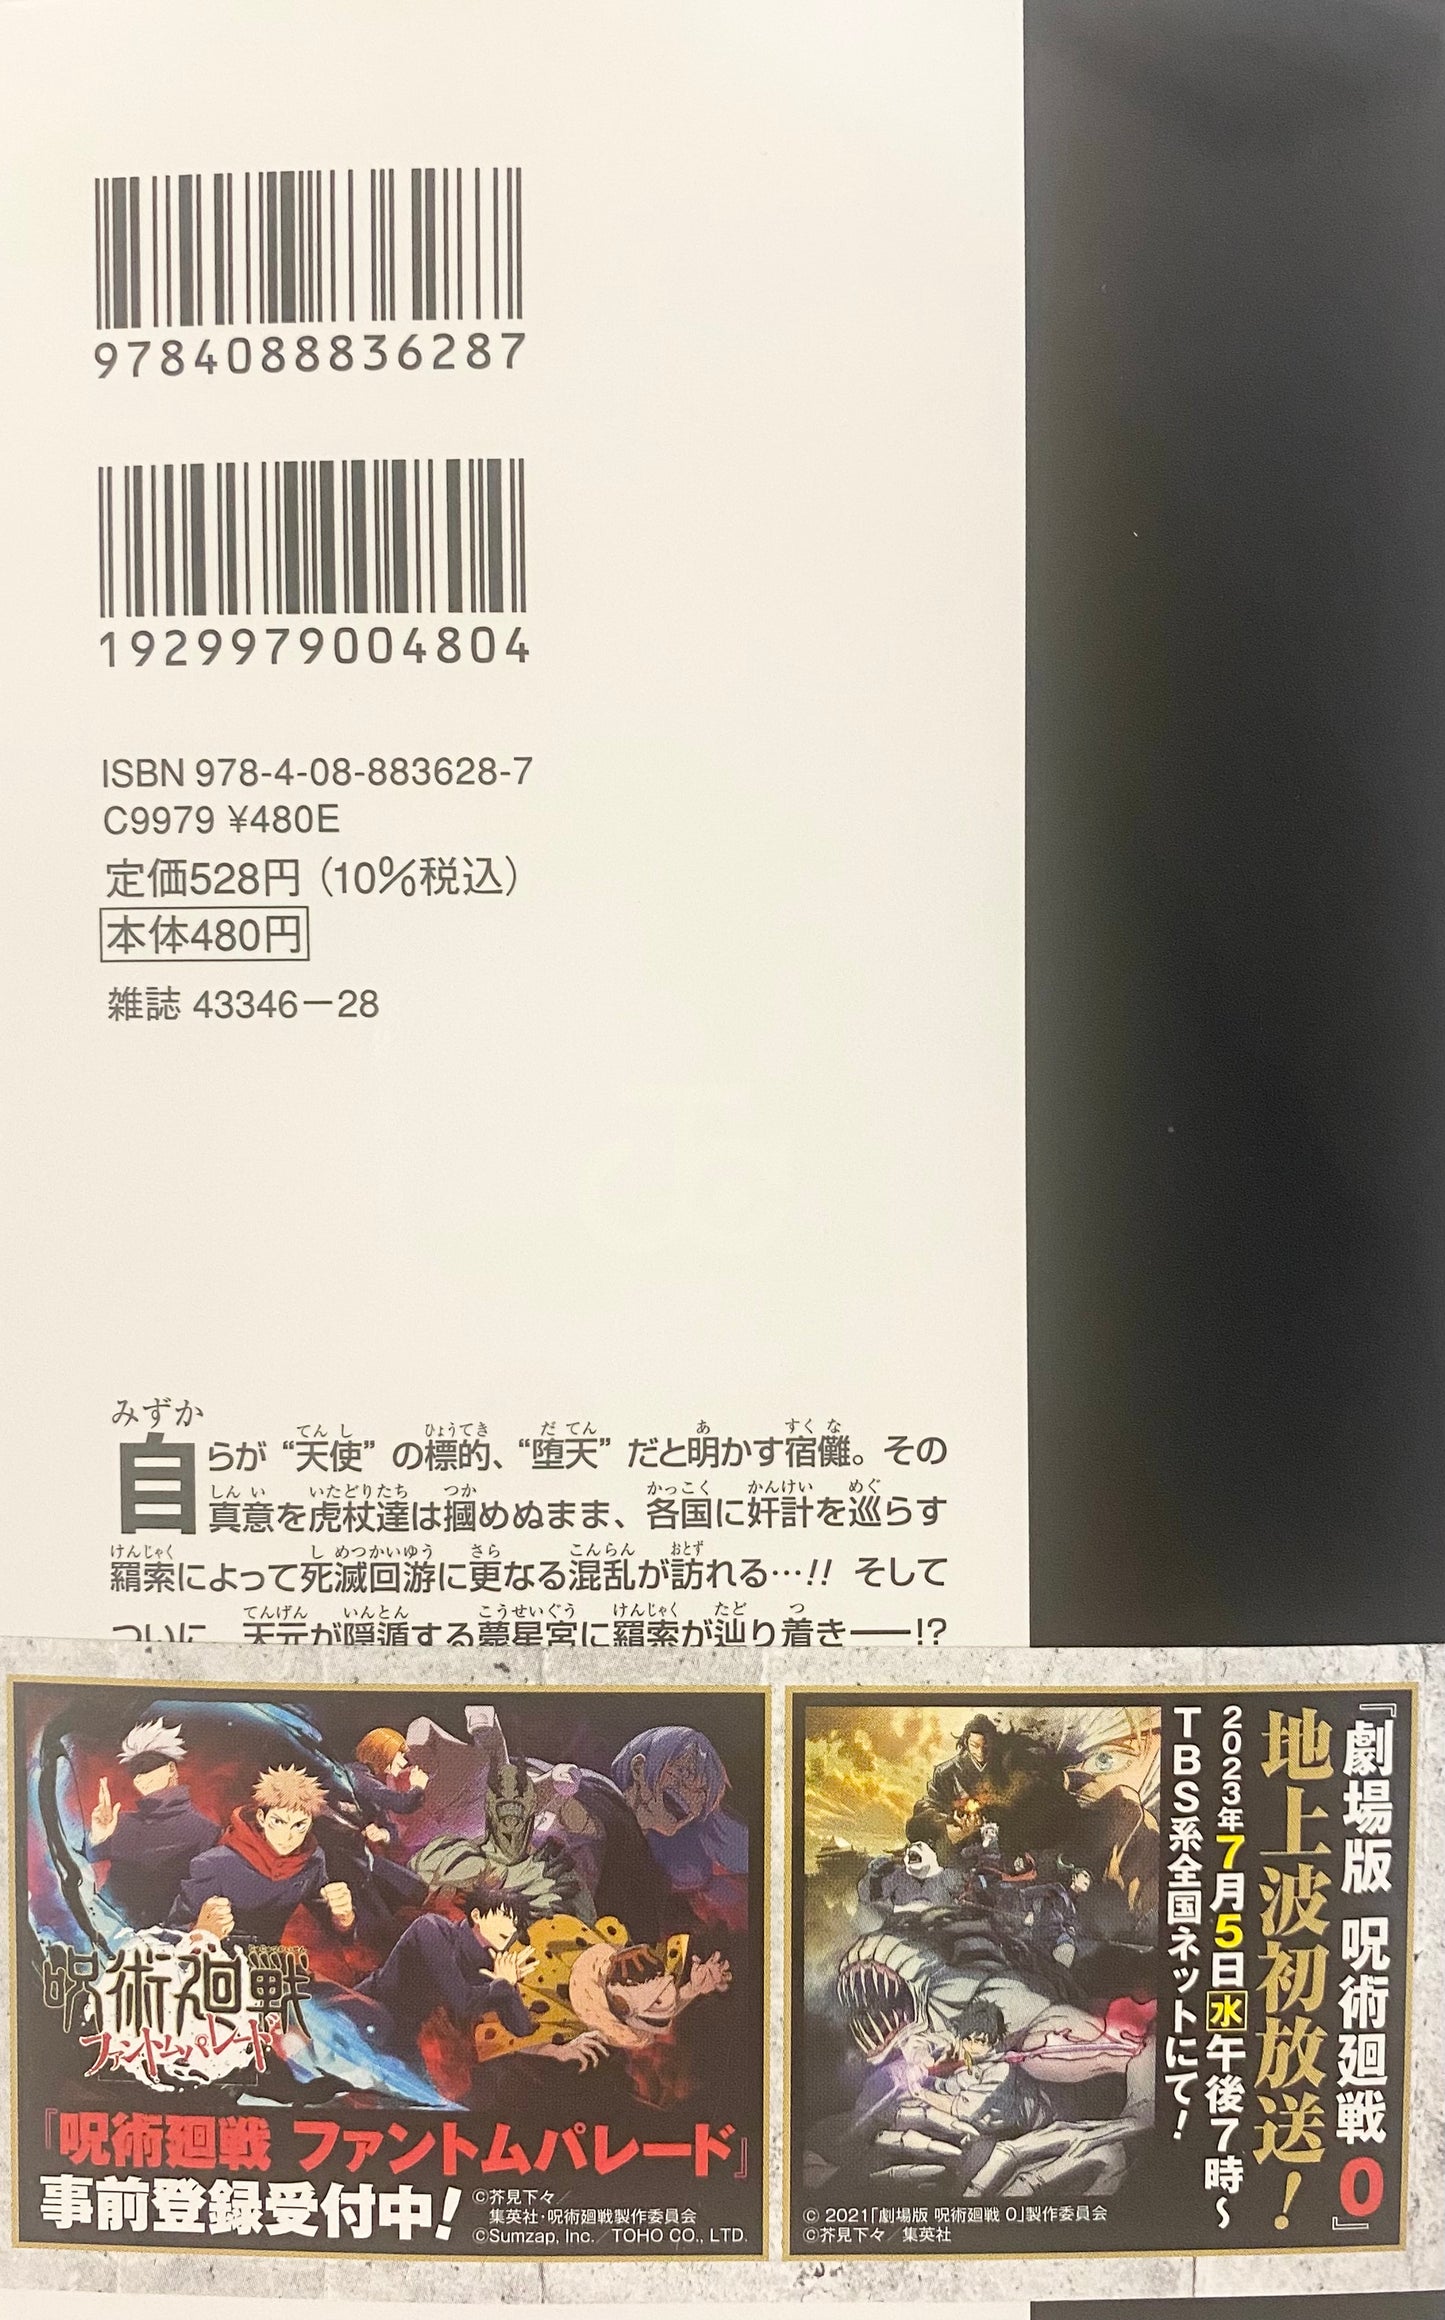 Jujutsu Kaisen Vol.23-Official Japanese Edition